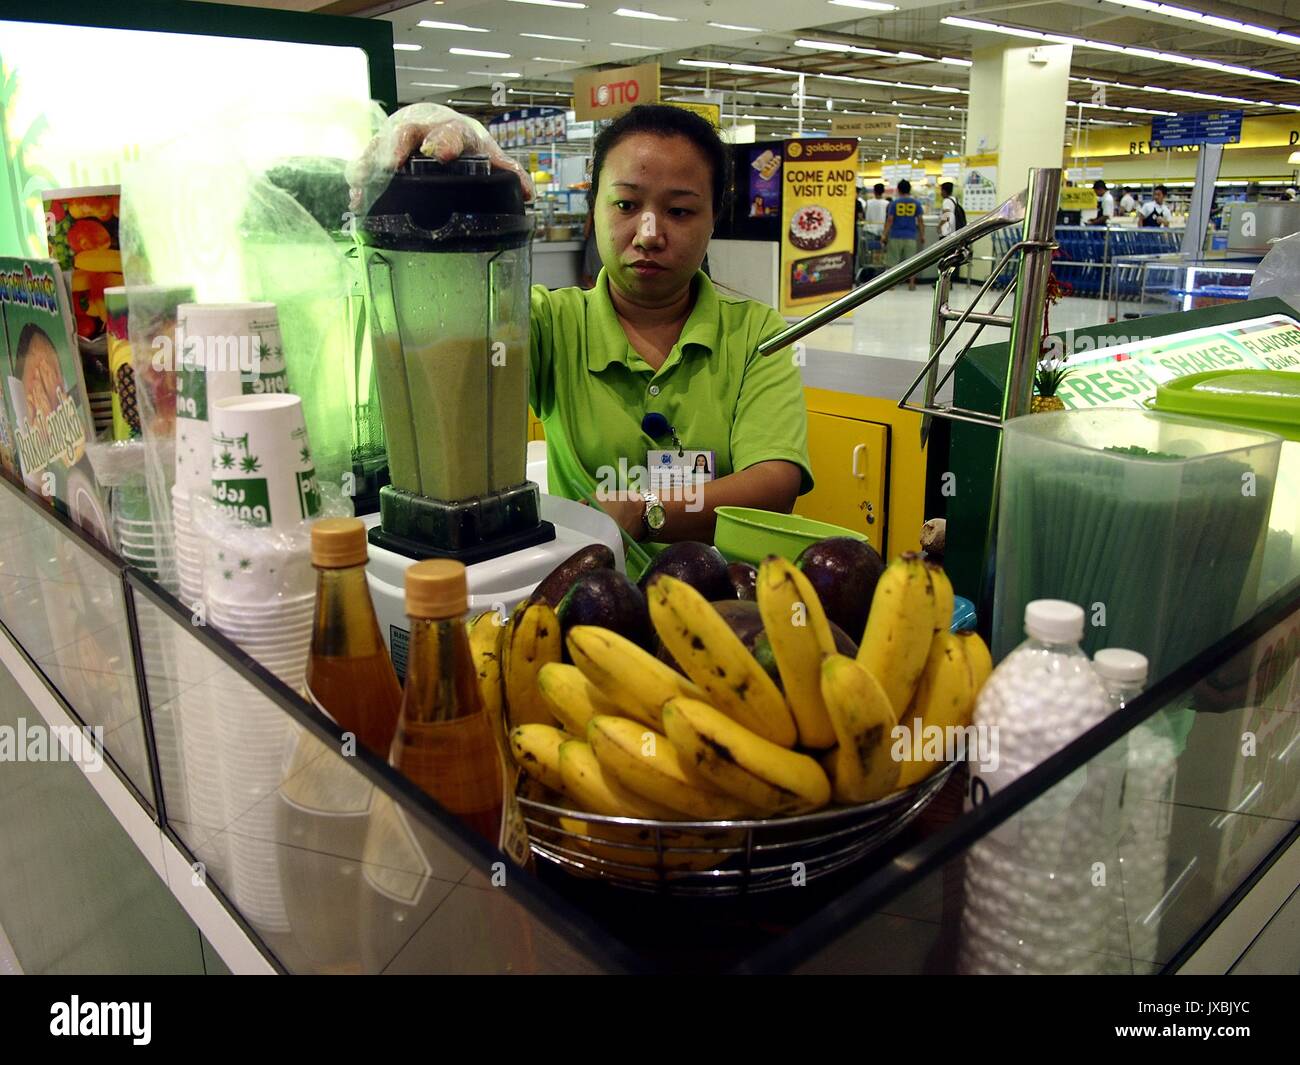 ANGONO, RIZAL, PHILIPPINES - AUGUST 12, 2017: Food kiosk employee prepares a fruit shake for a customer Stock Photo